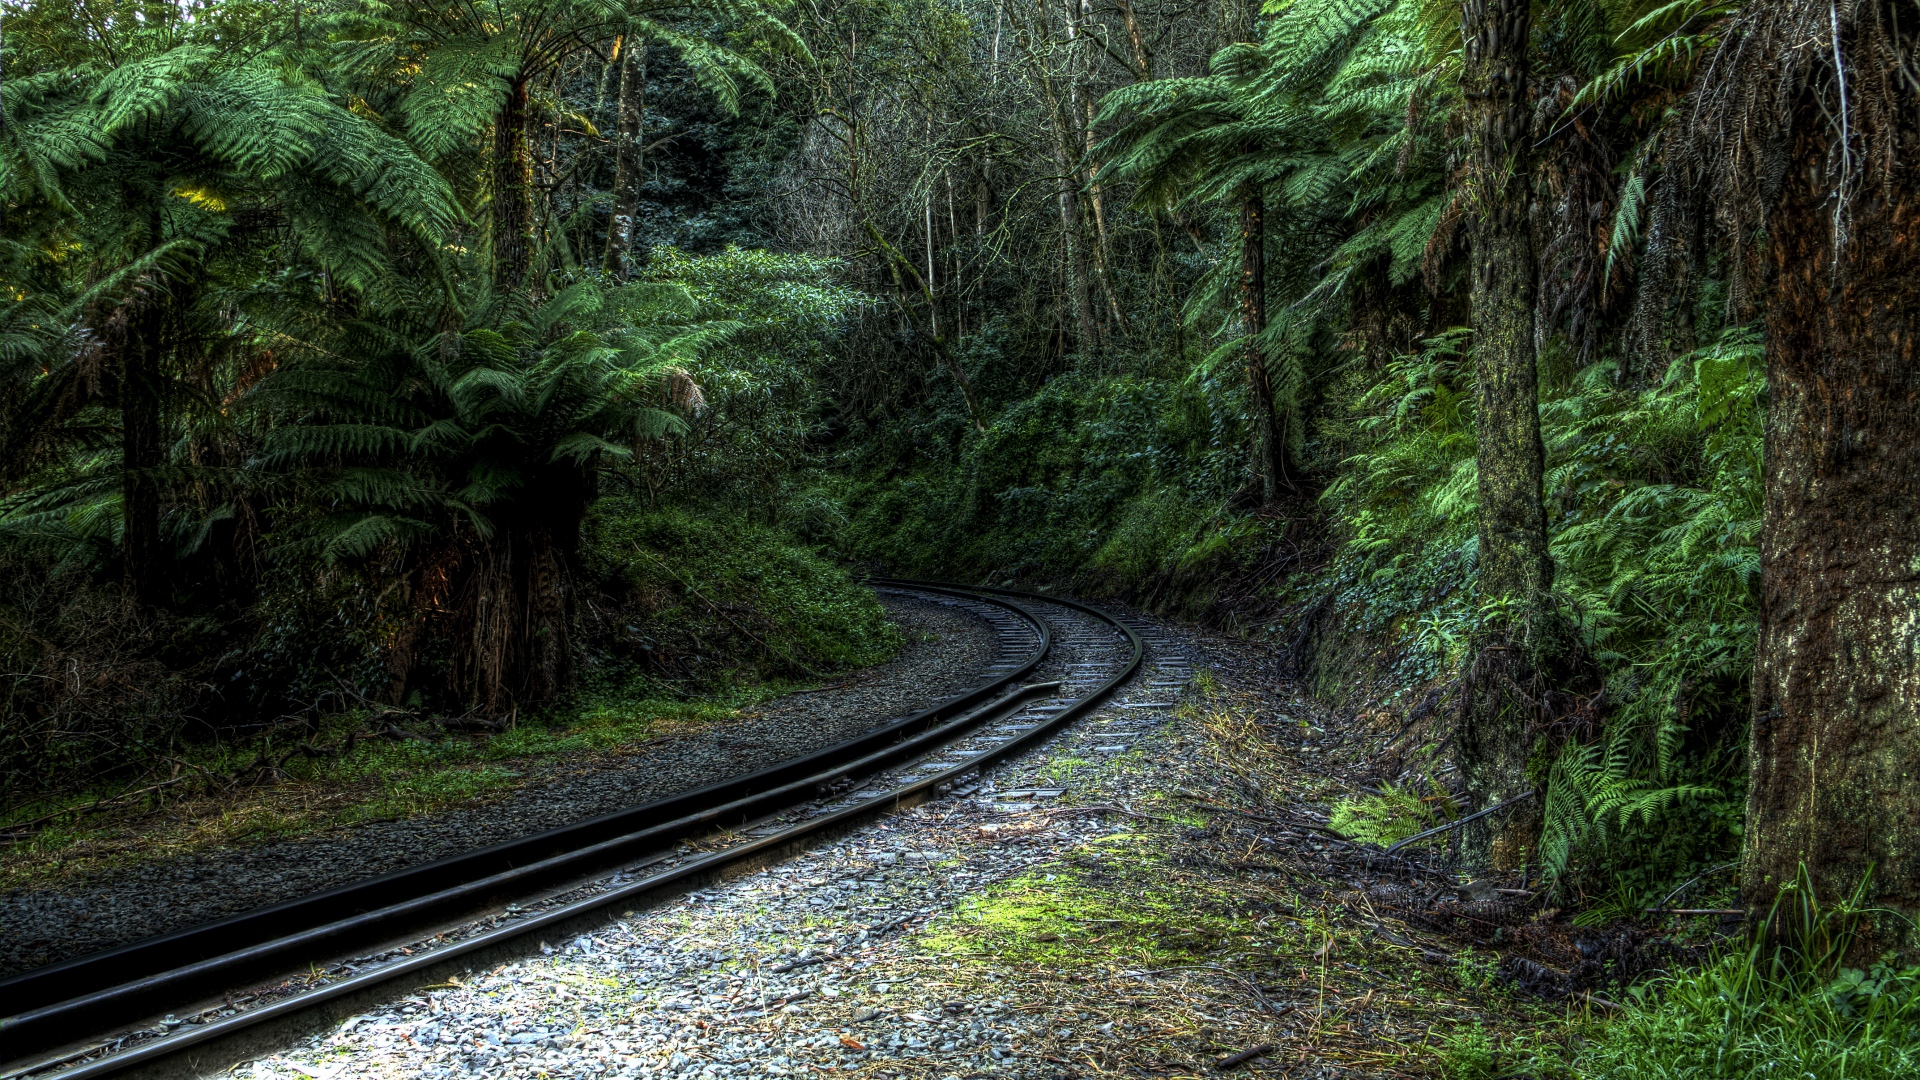 Wallpaper Tropical Forest Railway Landscape Full HD 1080p